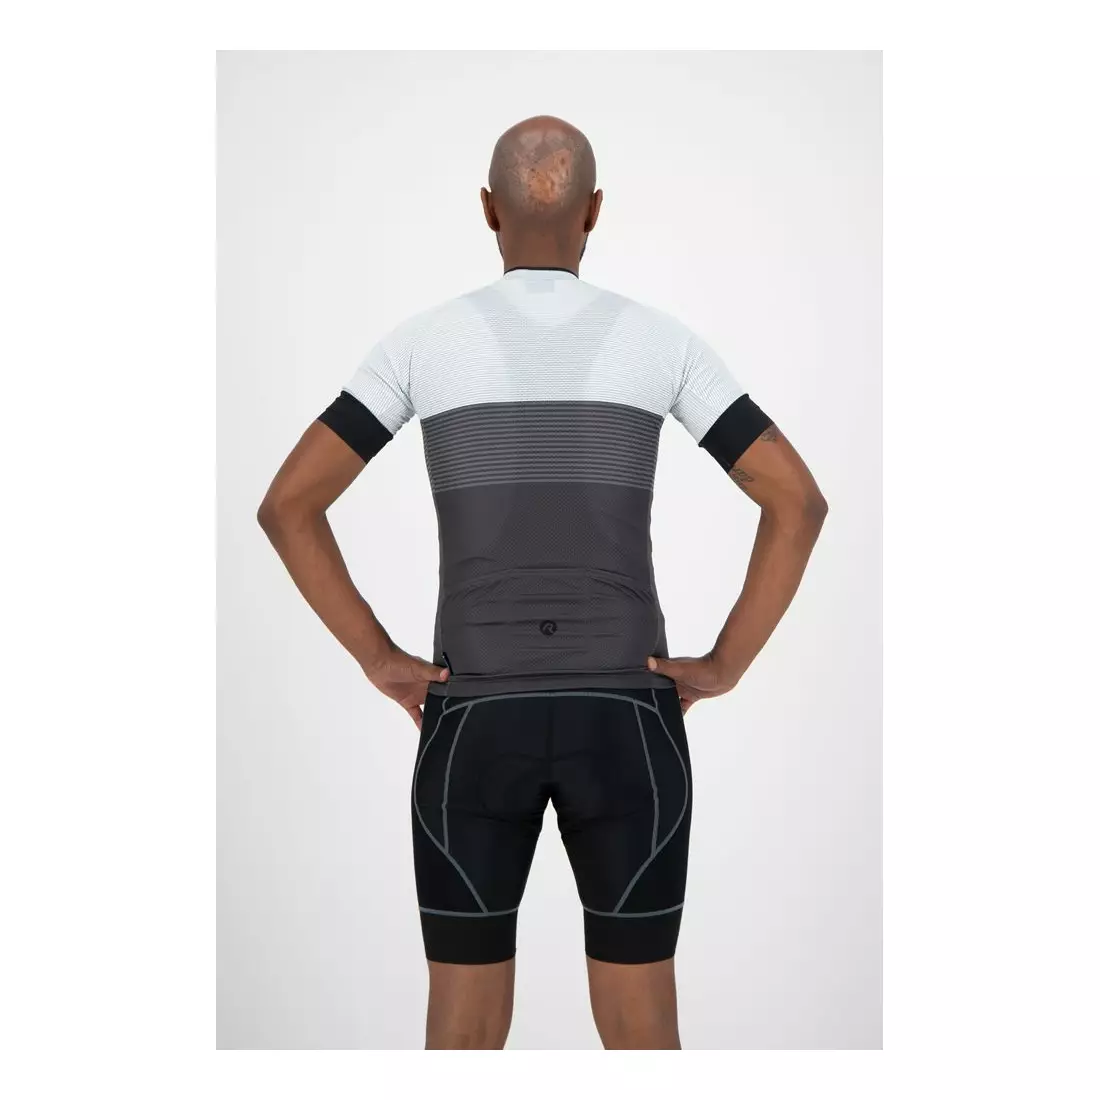 ROGELLI men's bicycle t-shirt BOOST black/white 001.117